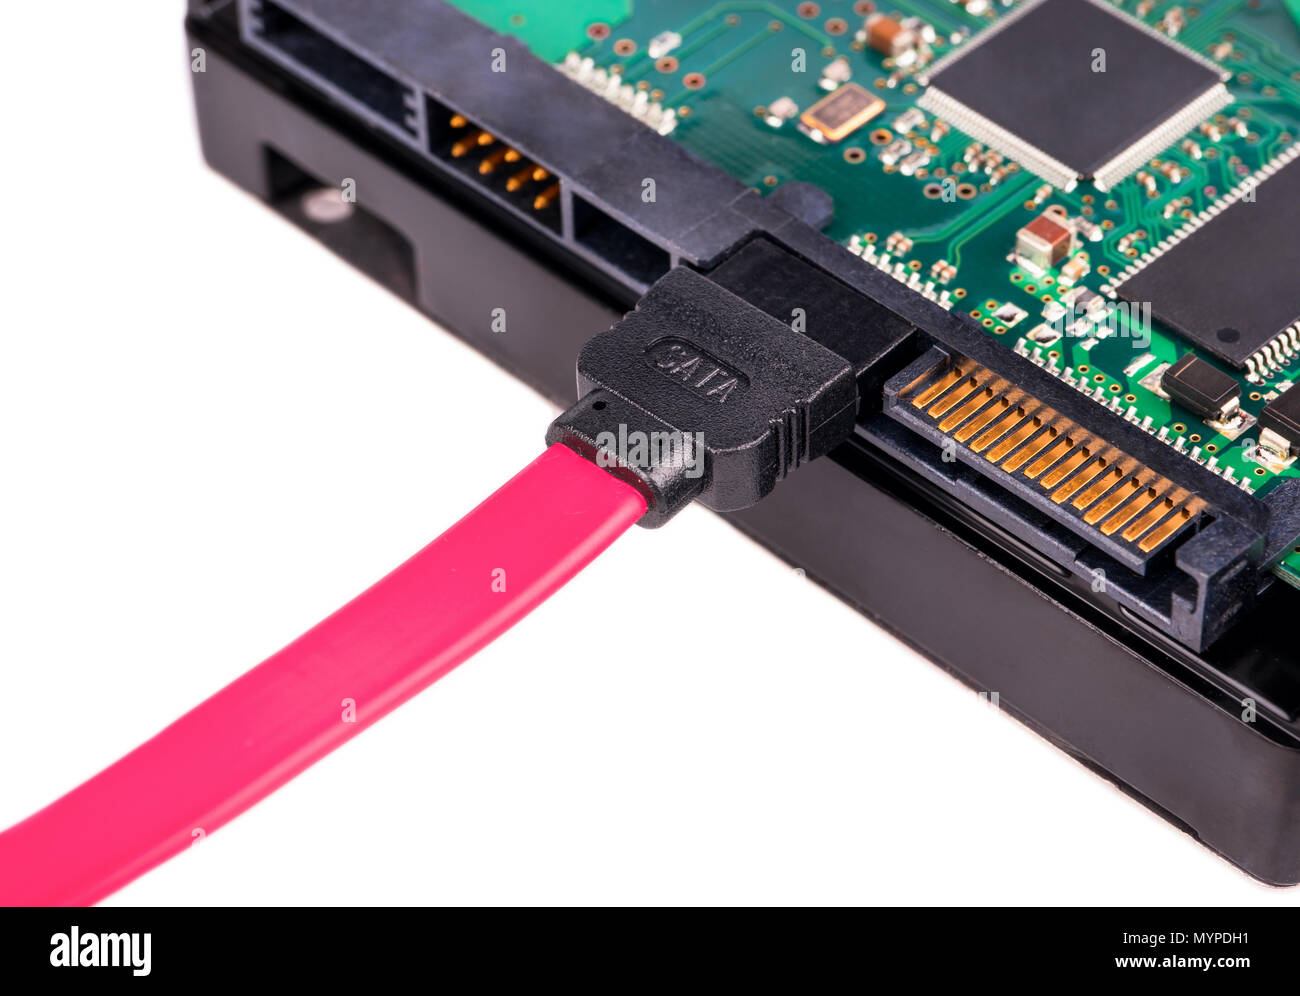 Festplatte (HDD) verbunden, die an die SATA-Kabel close-up Stockfotografie  - Alamy